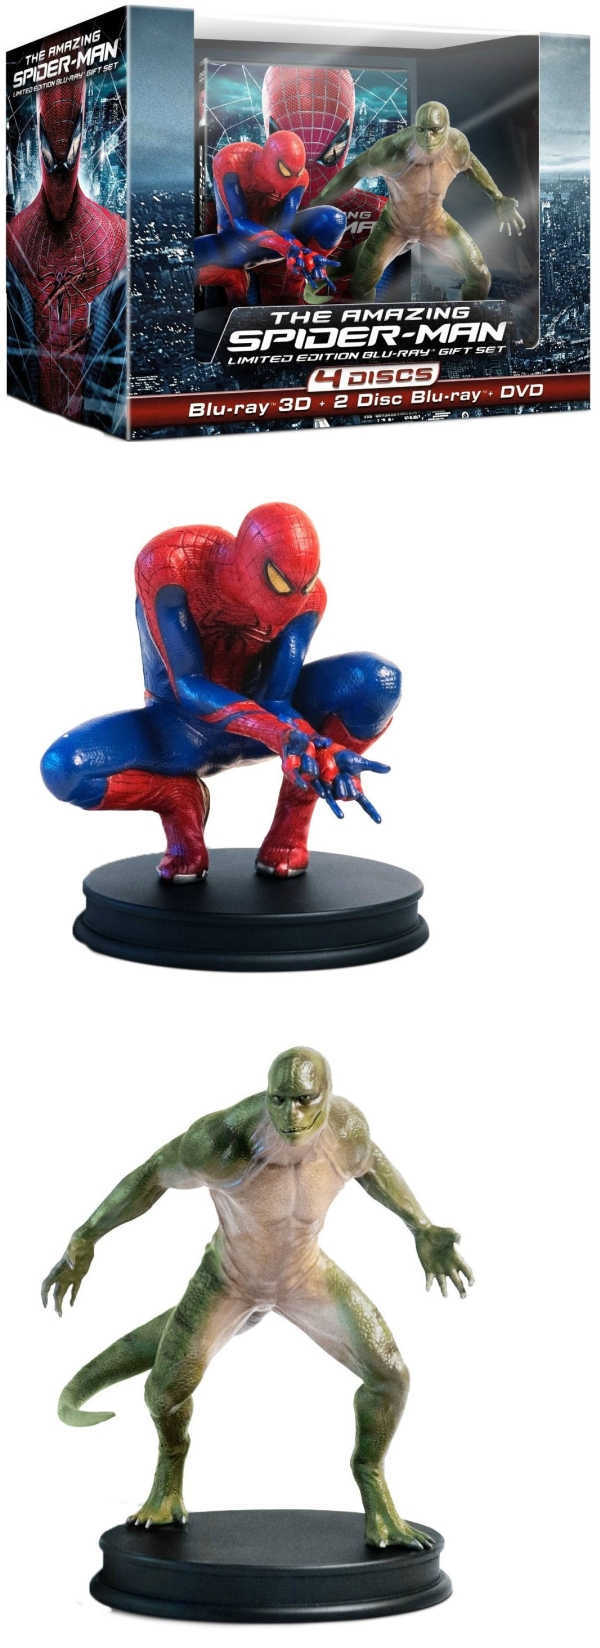 The Amazing Spider-Man (Blu-ray gift set)